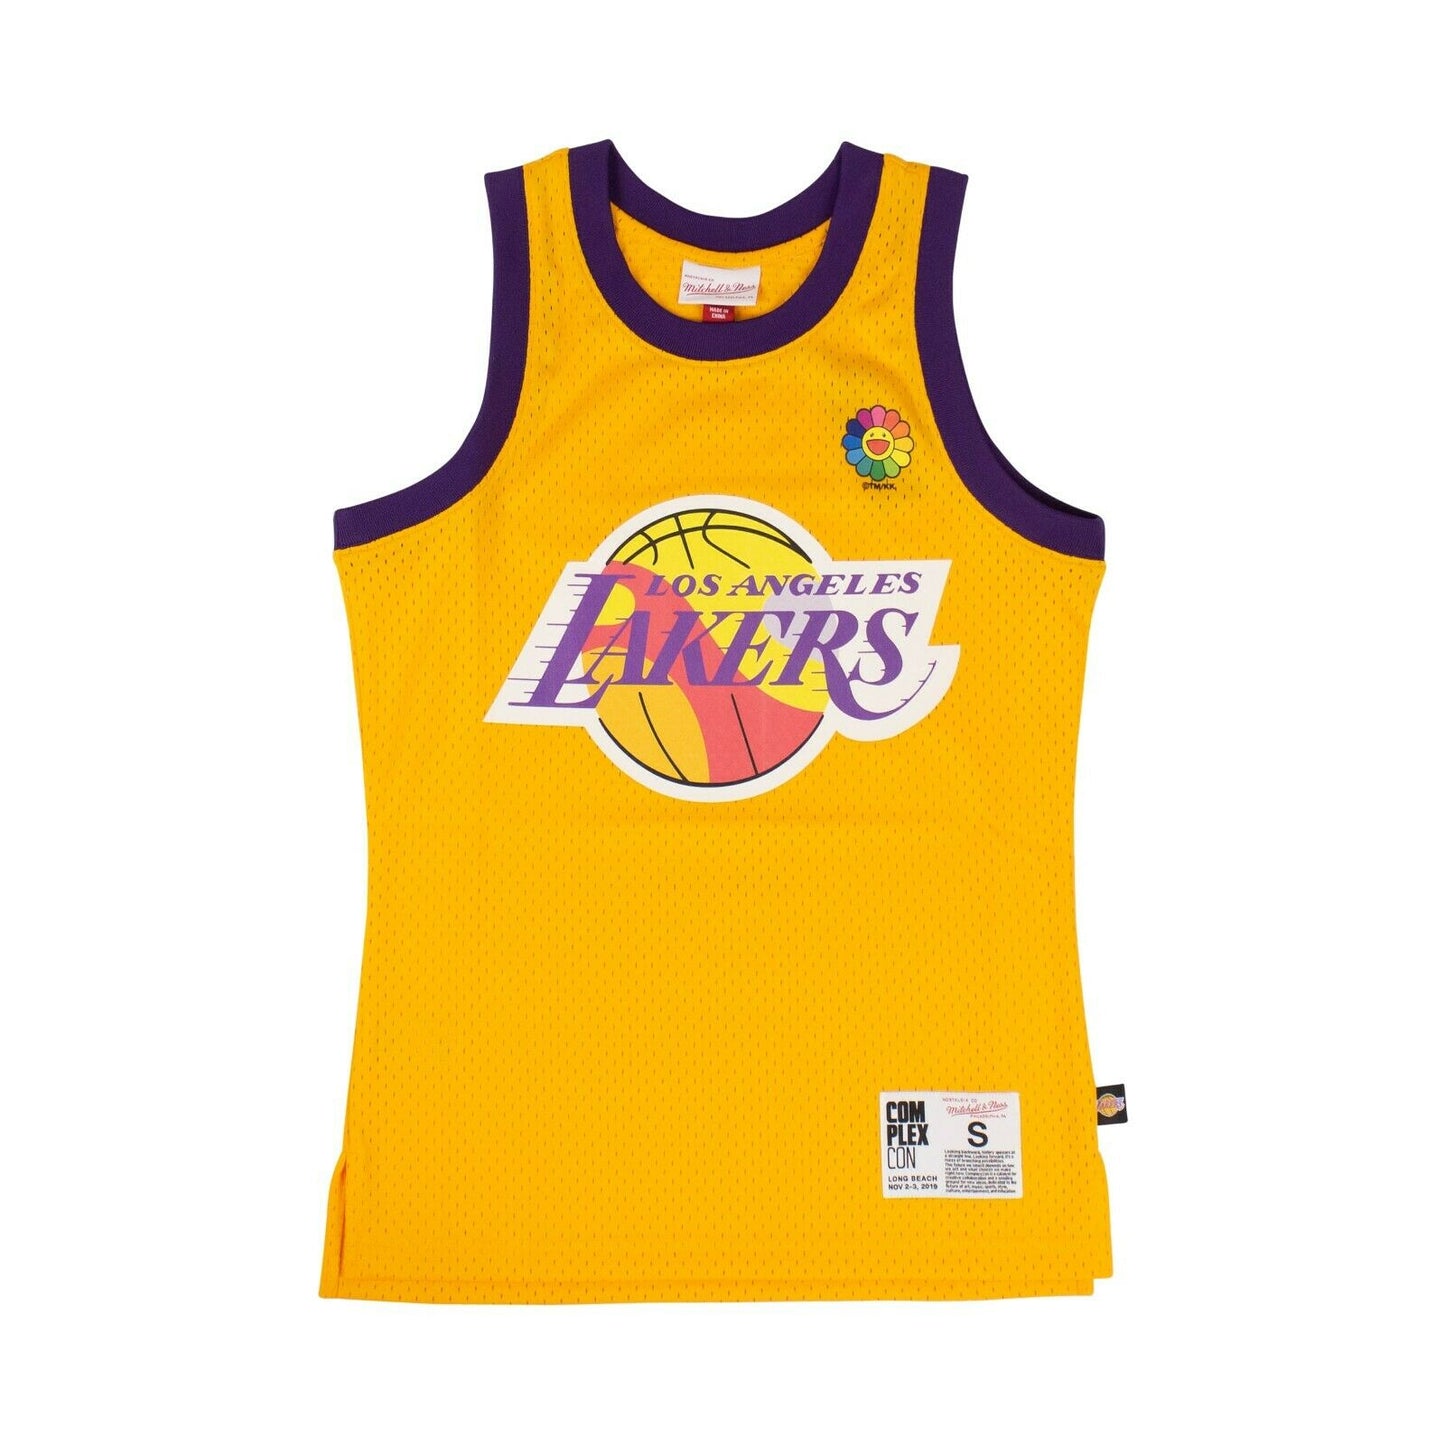 Takashi Murakami X Complexcon 'La Lakers' Basketball Jersey - Yellow